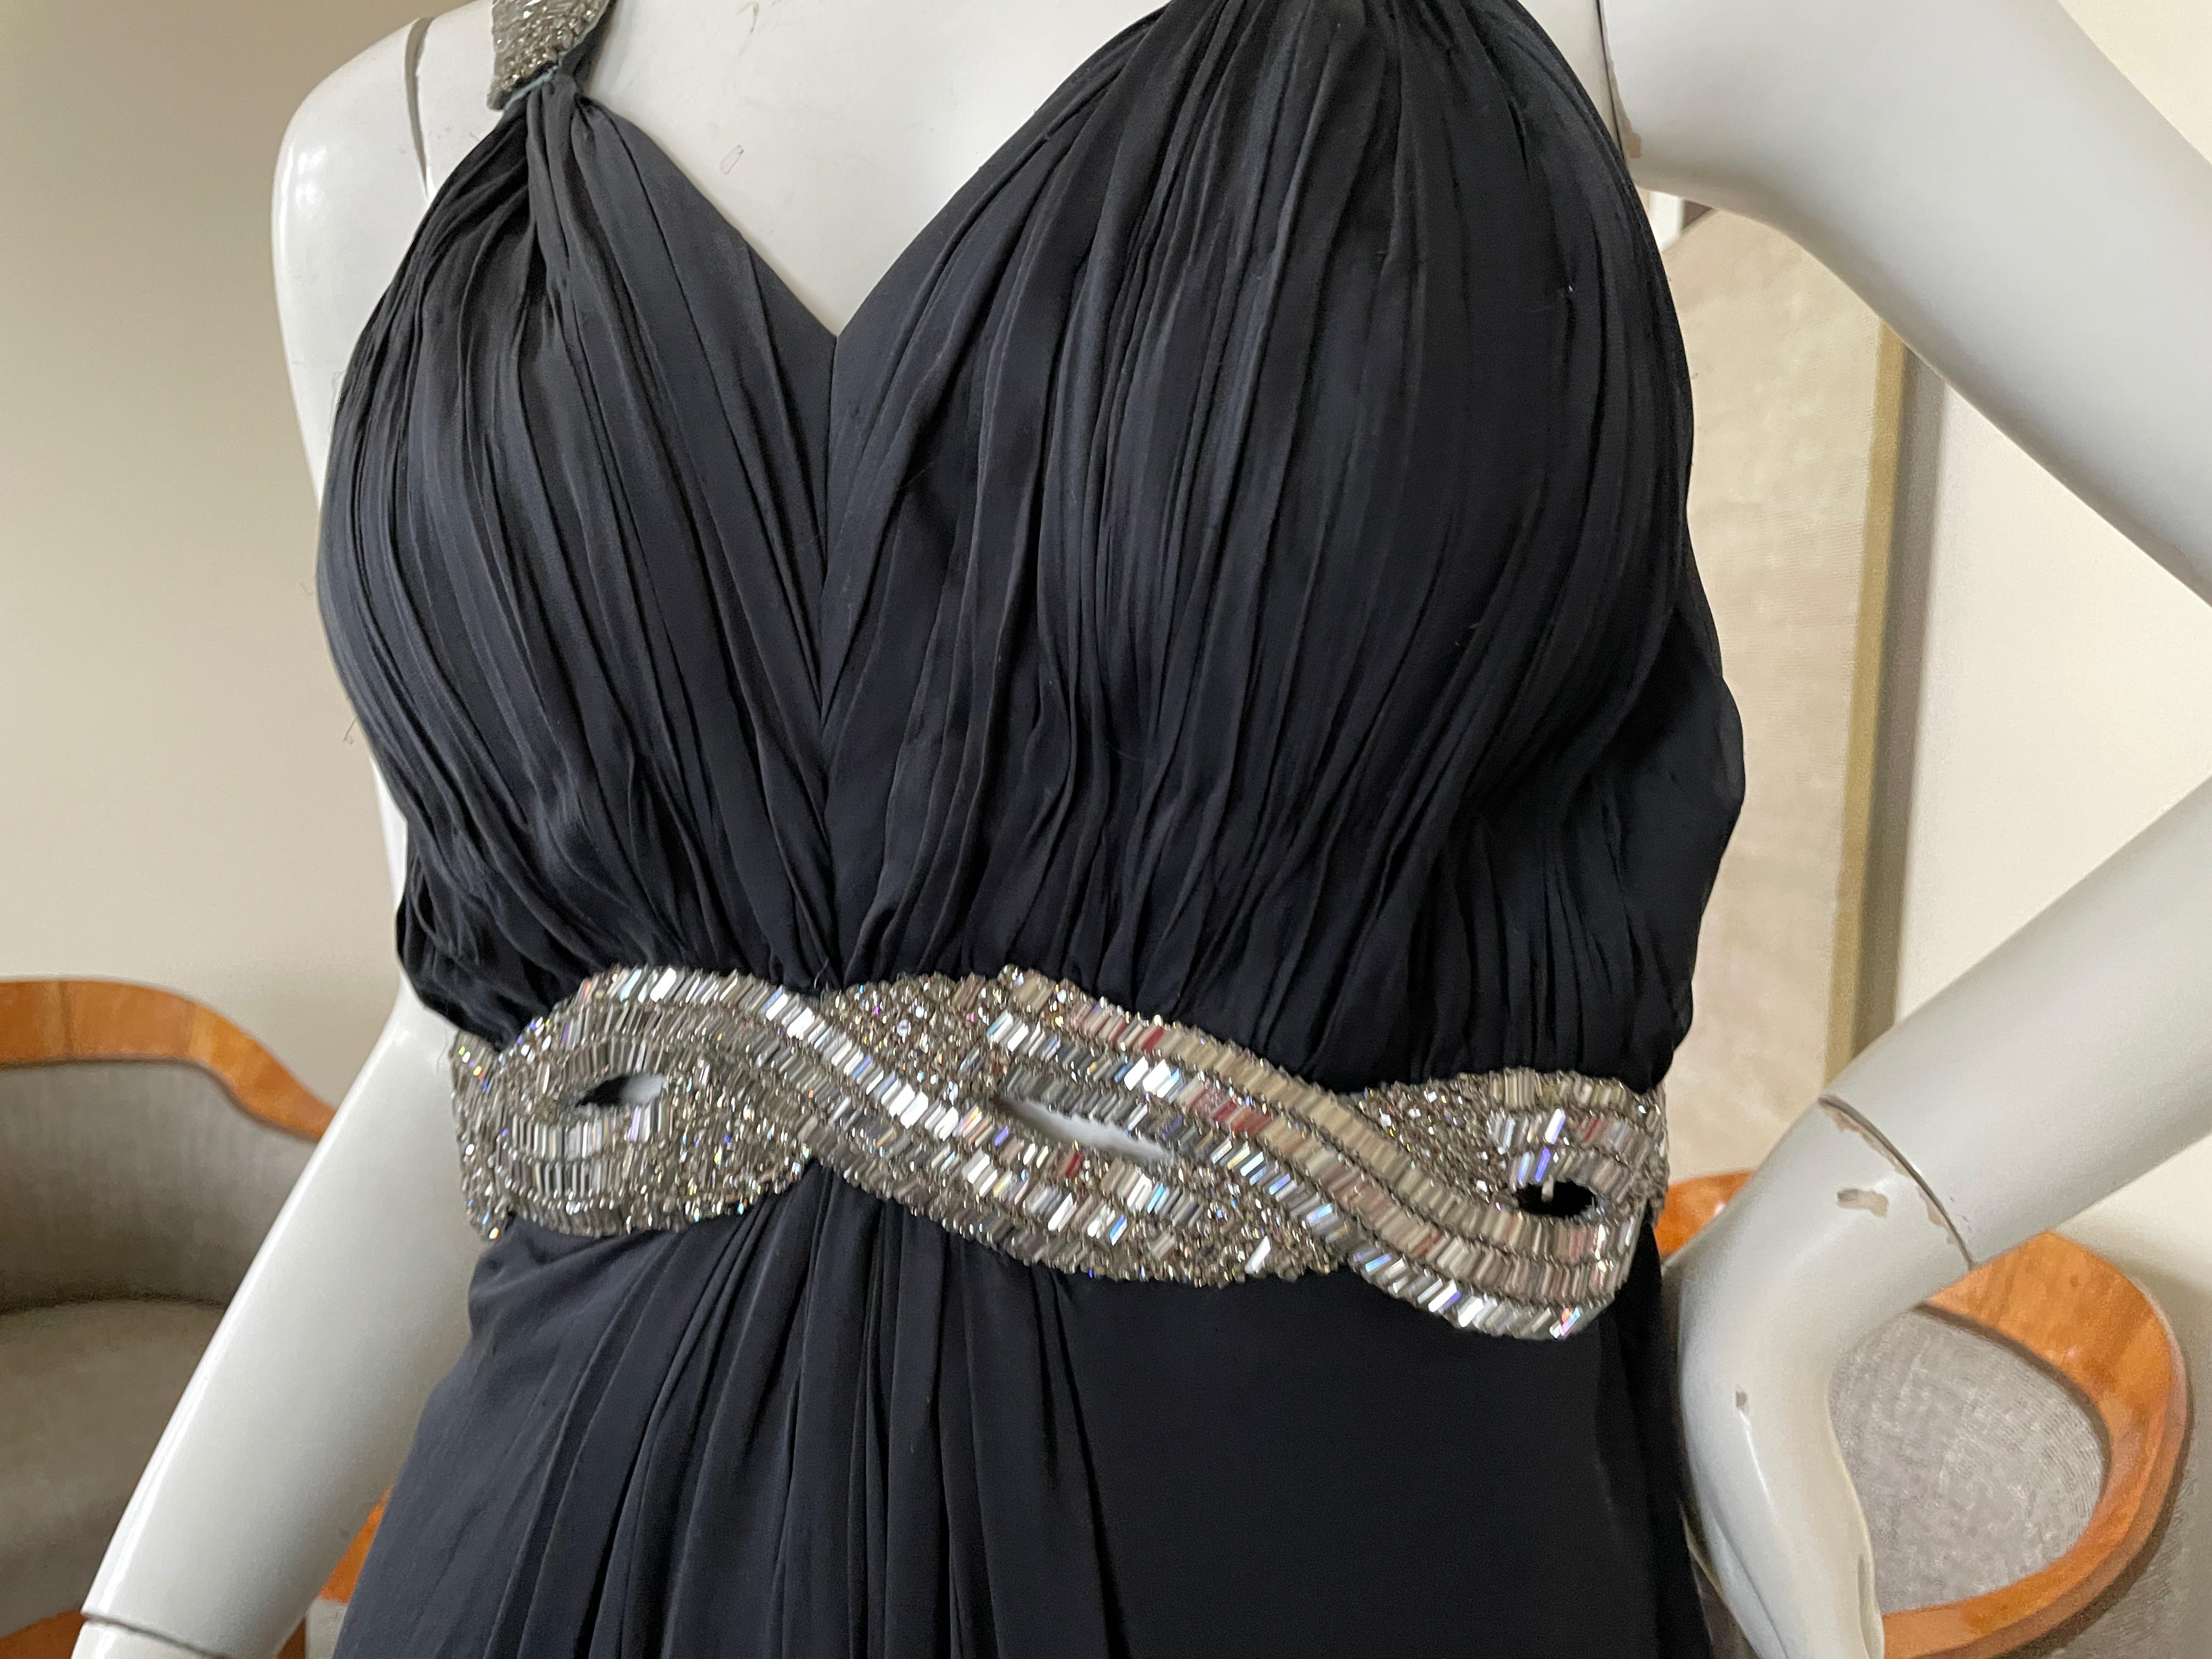  Roberto Cavalli Vintage Black Dress with Extravagant Crystal Baguette Ornaments For Sale 1